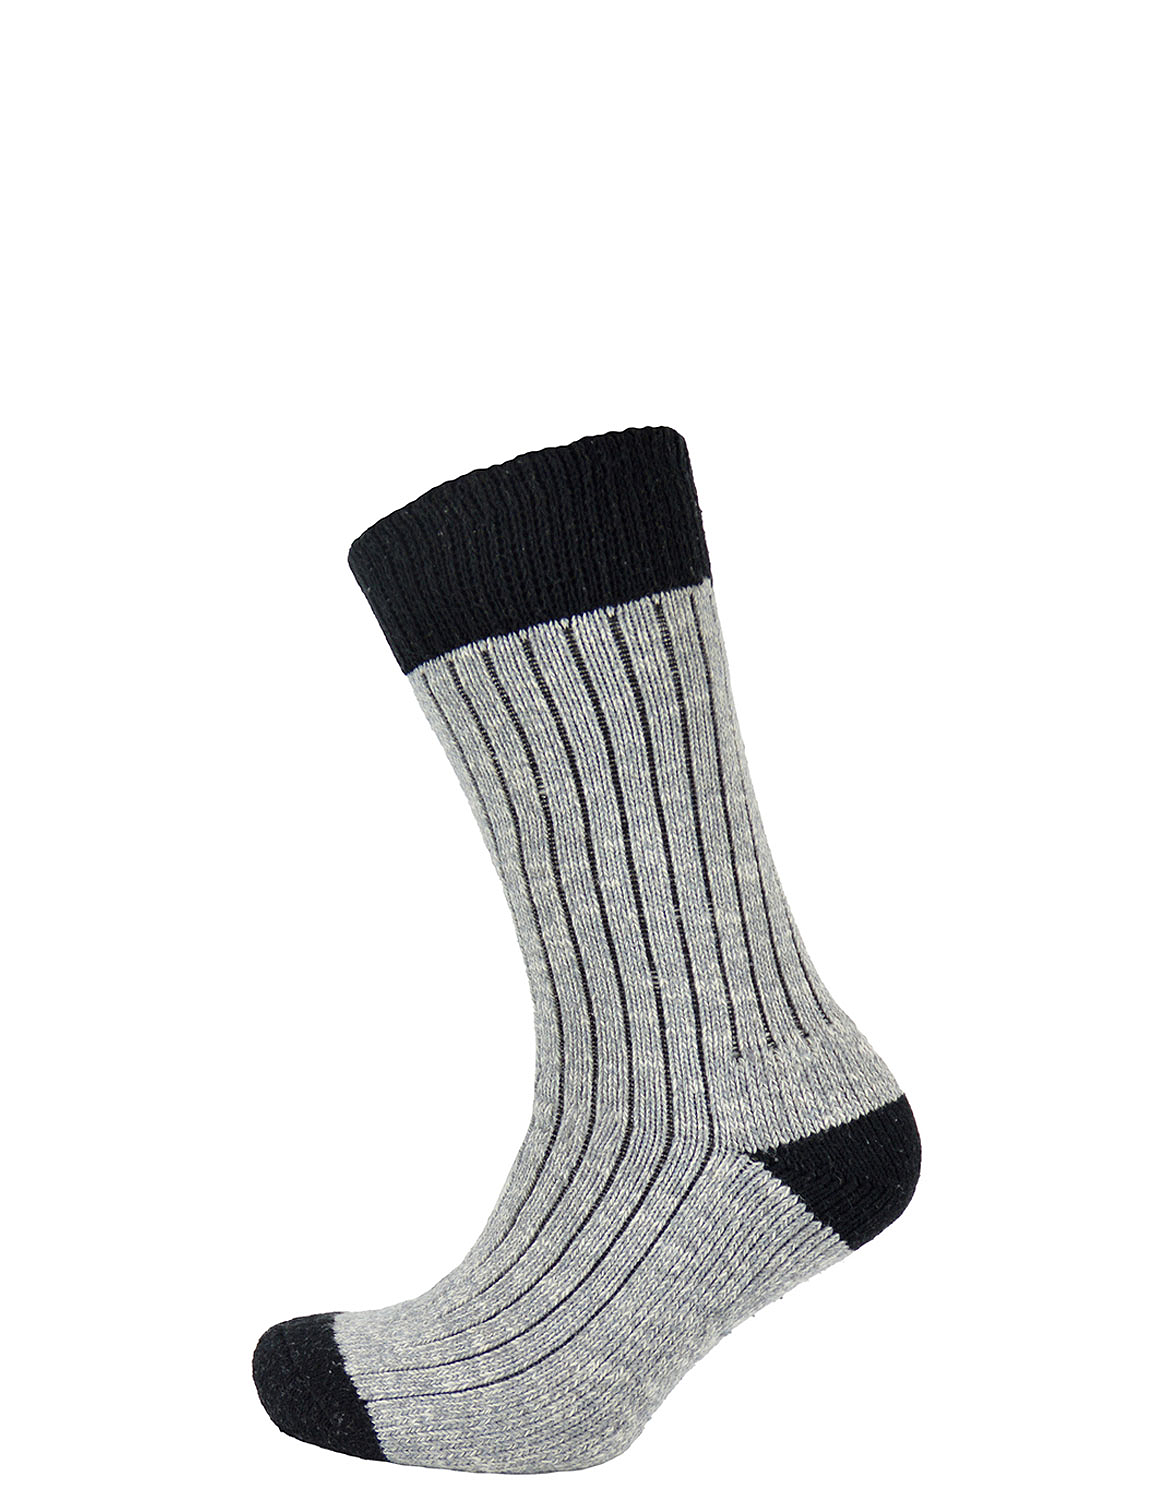 Cotton Rich - Walking Socks - HJ Hall Socks - Official Site